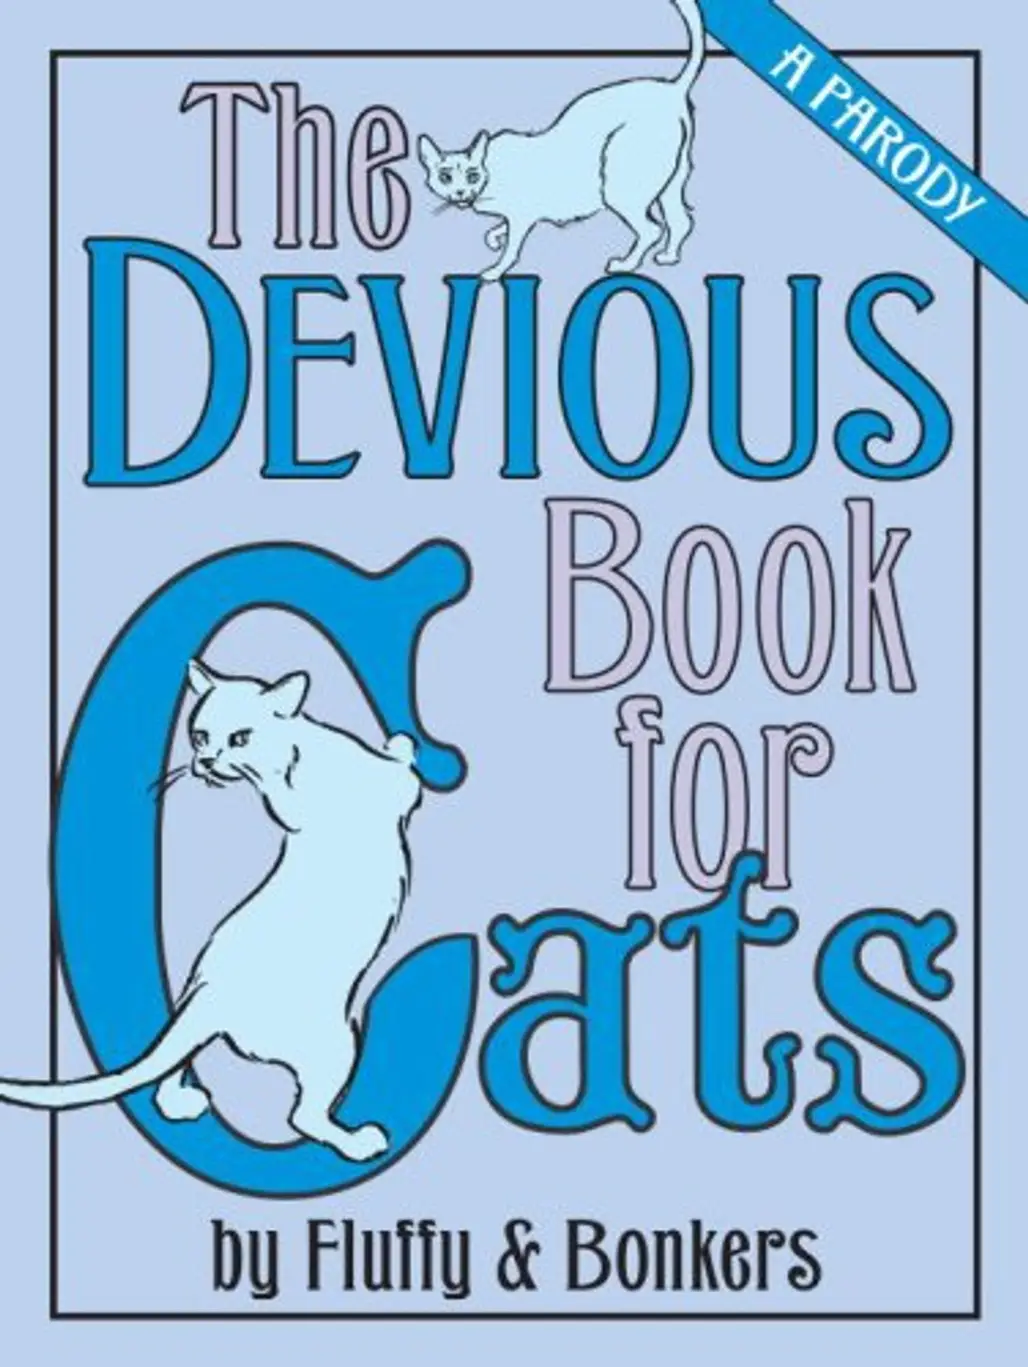 “the Devious Book for Cats: a Parody” by Joe Garden